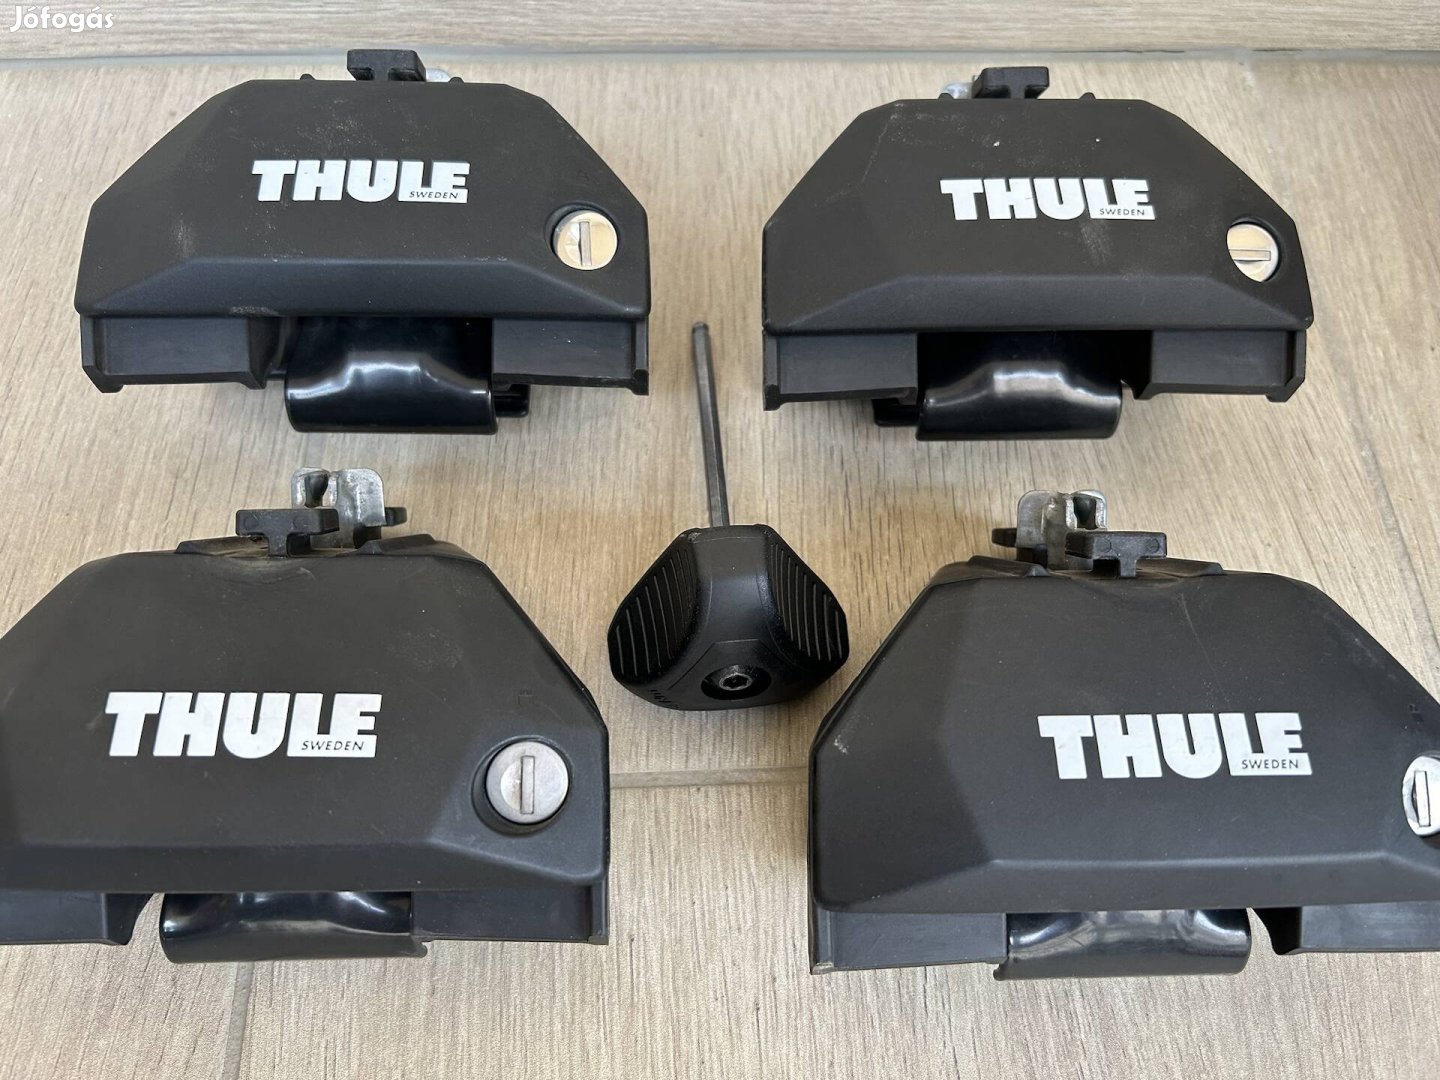 Thule 7106 + Thule KIT 6013 